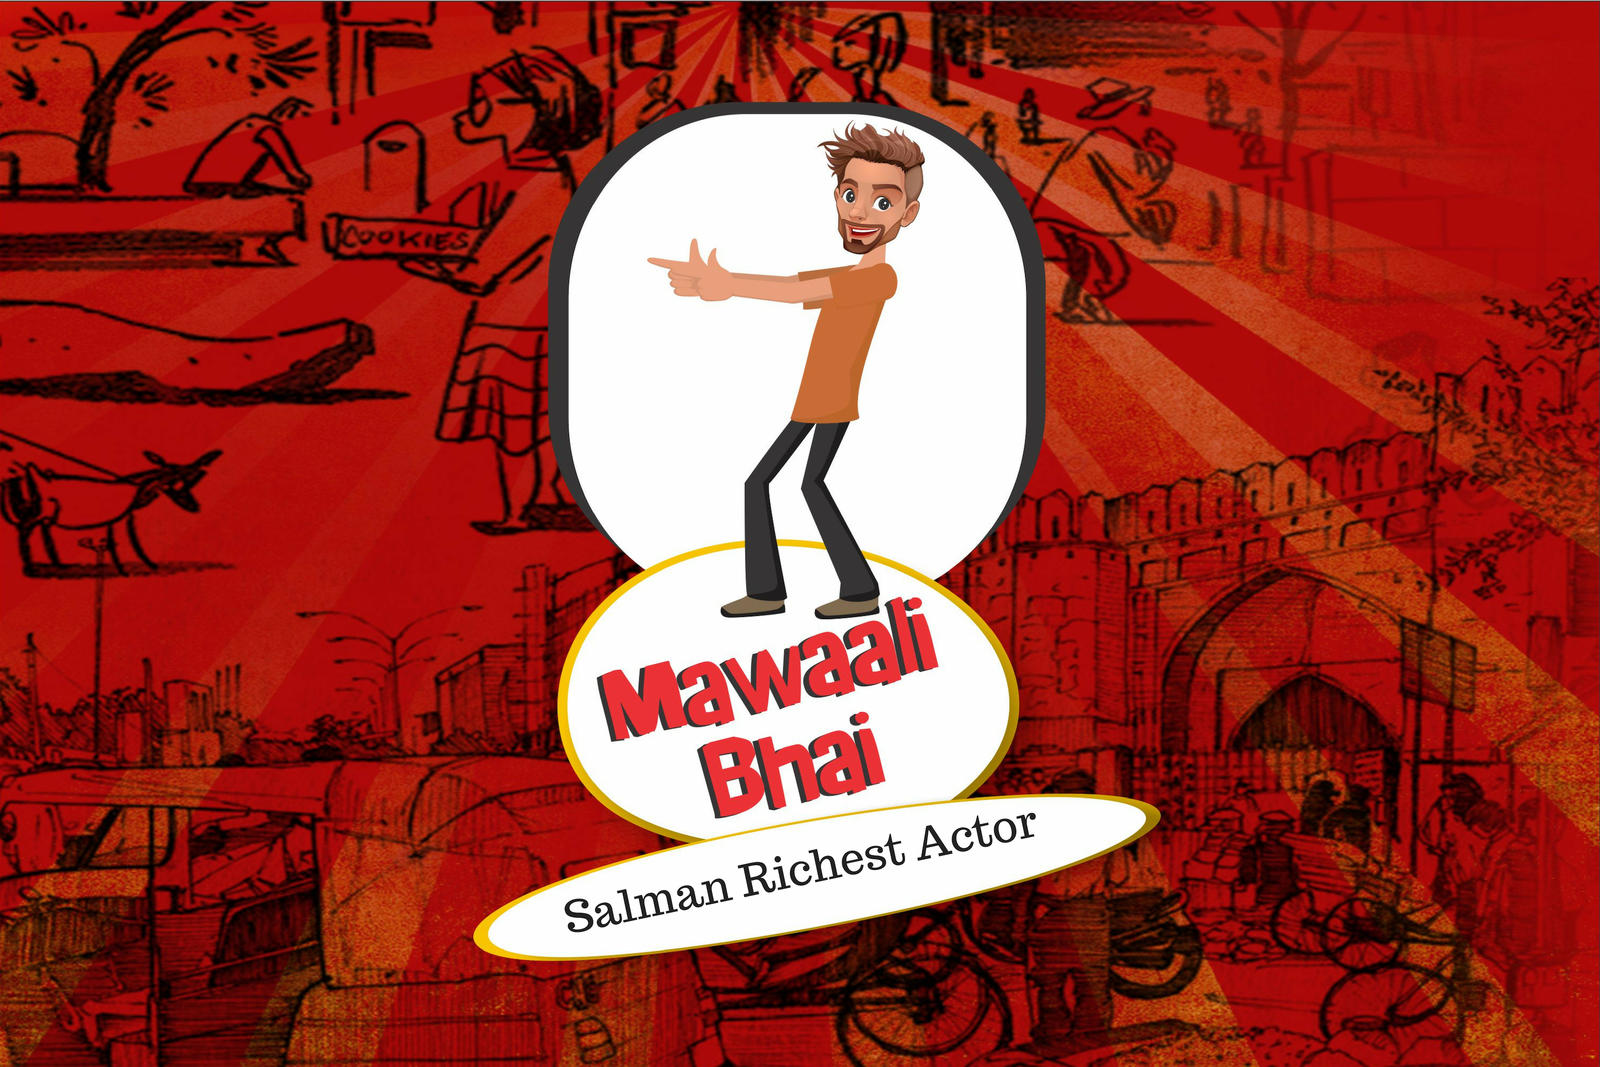 Mawaali Bhai - Salman Richest Actor